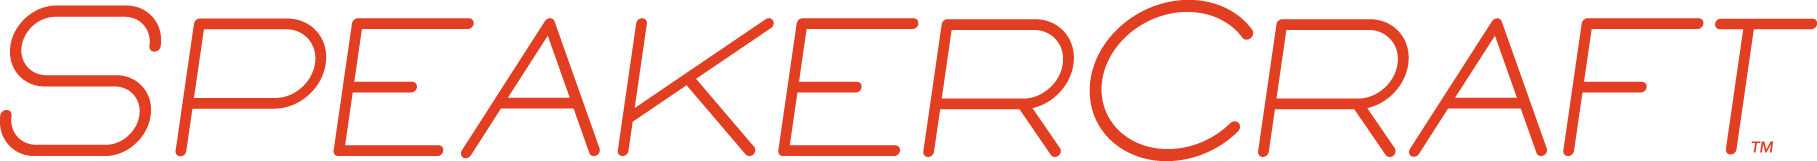 2020-SpeakerCraft-Logo1